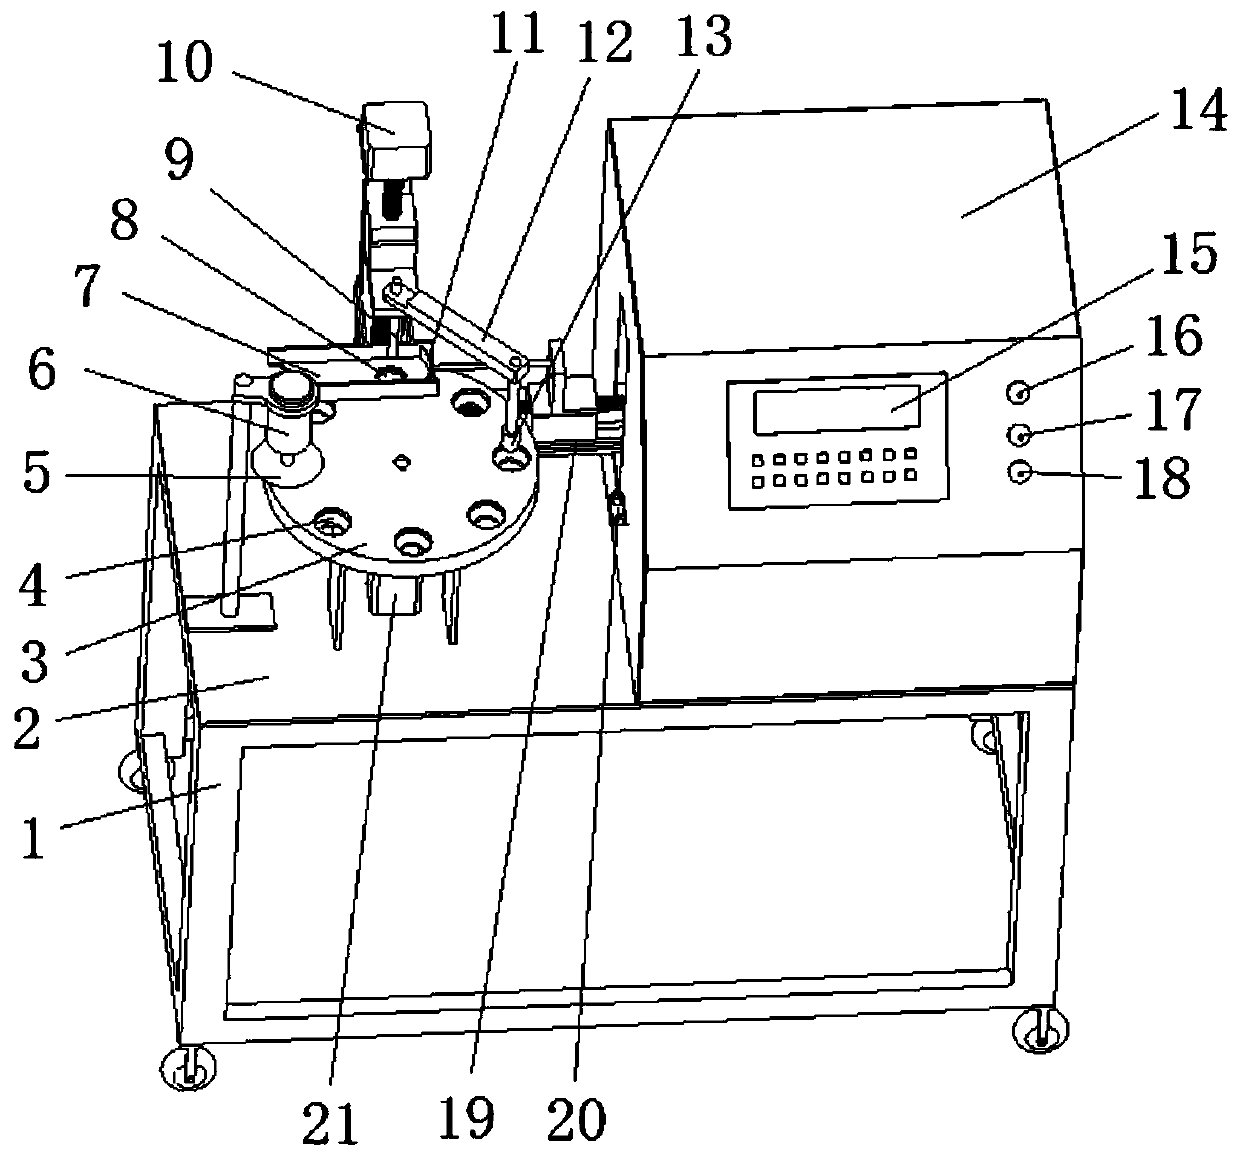 A vertical semi-automatic lychee pitting and peeling machine